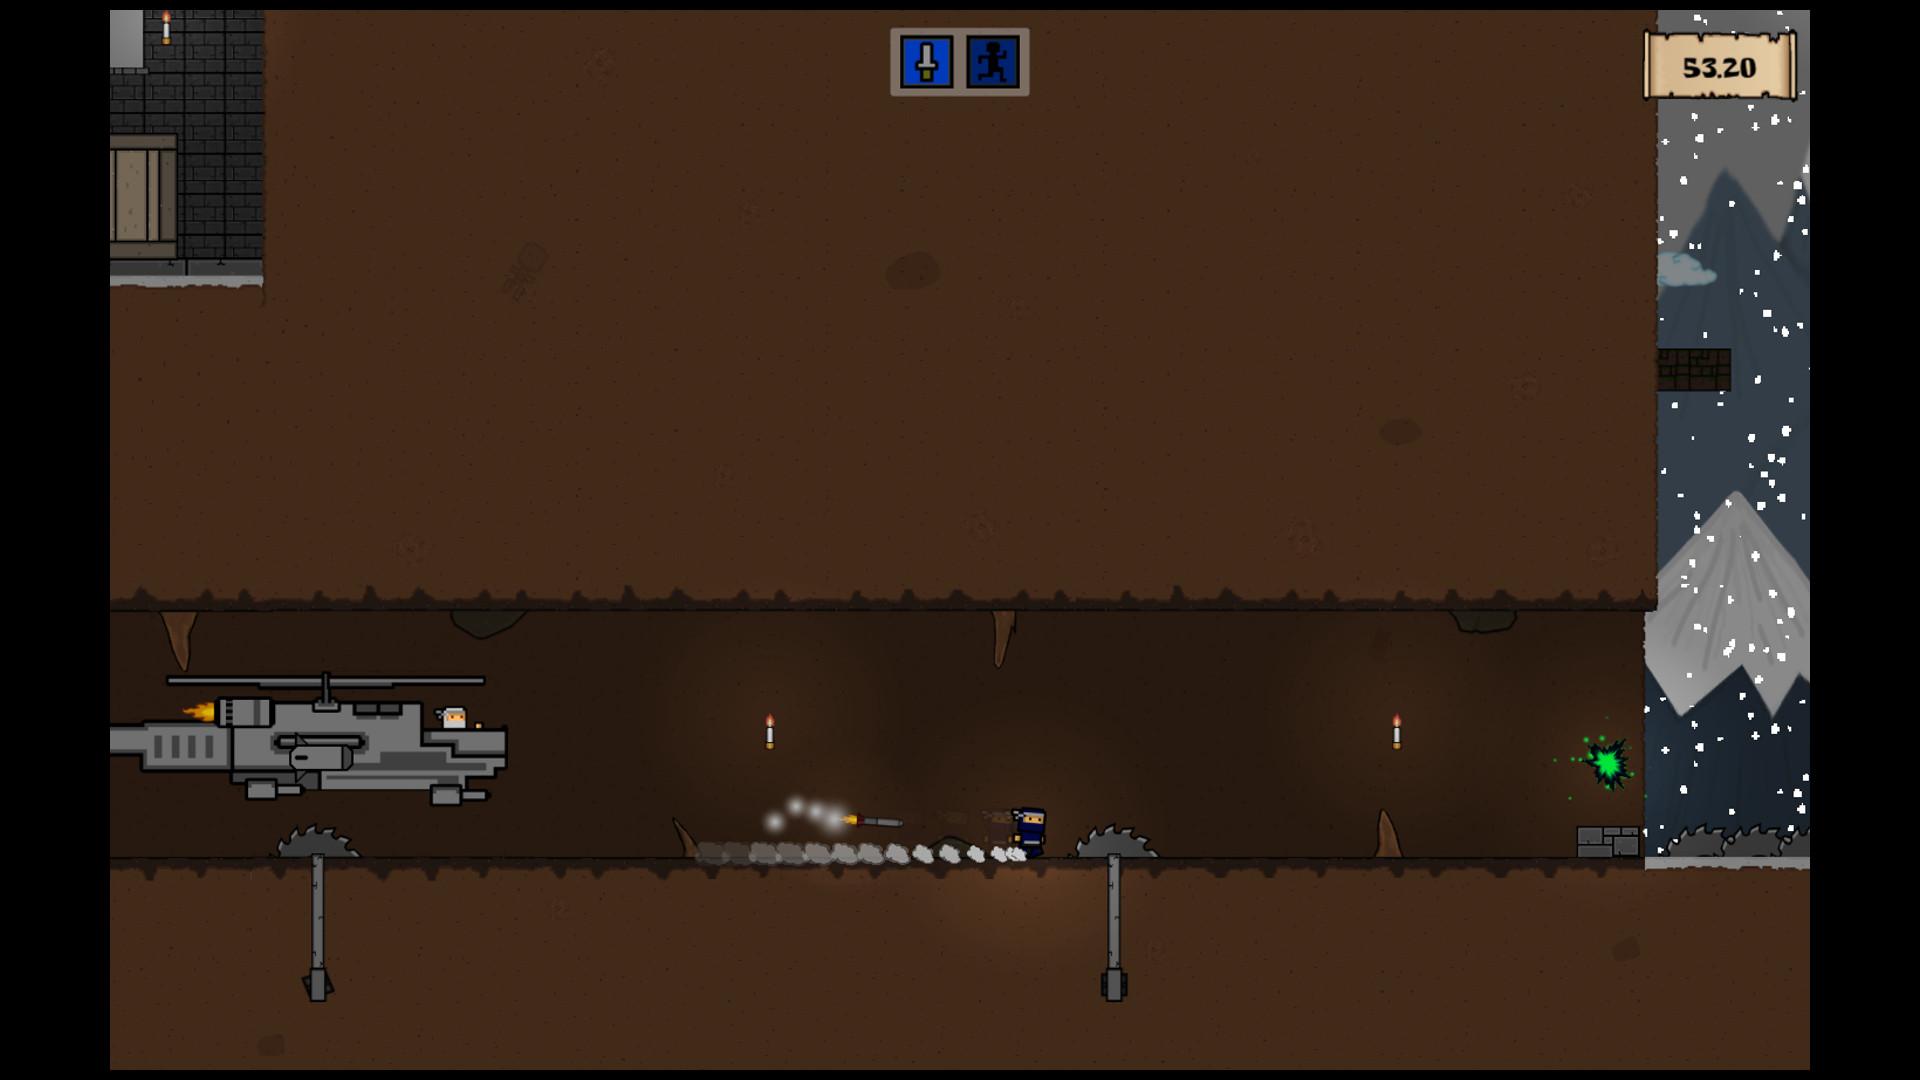 Screenshot №1 from game Save the Ninja Clan